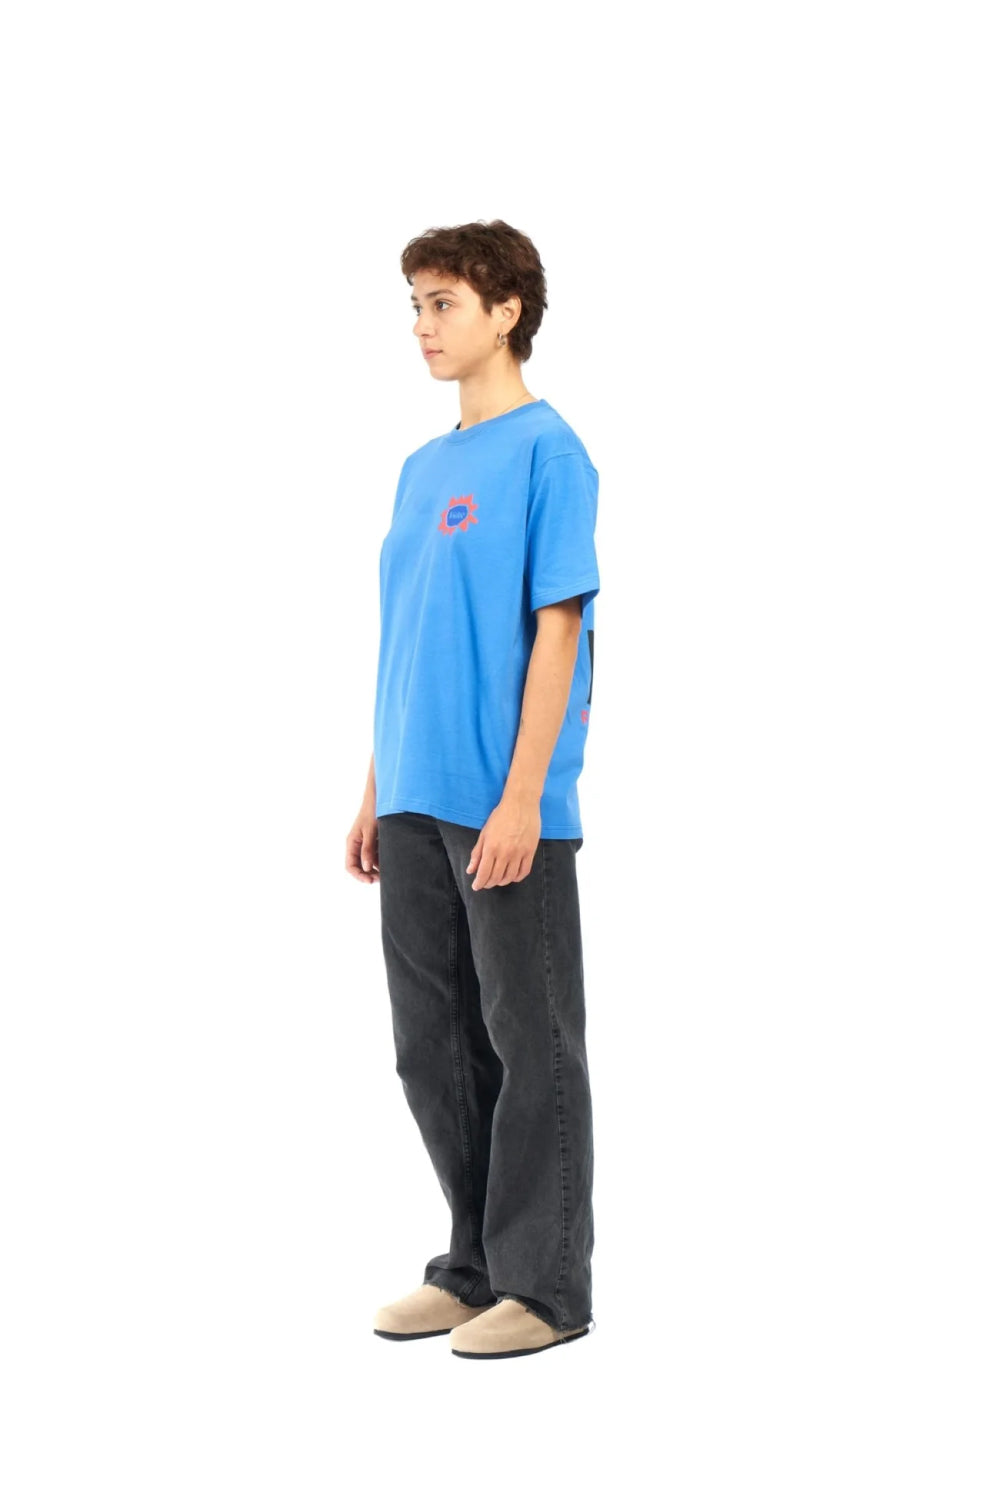 camiseta t shirt en color azul electrico de algdón